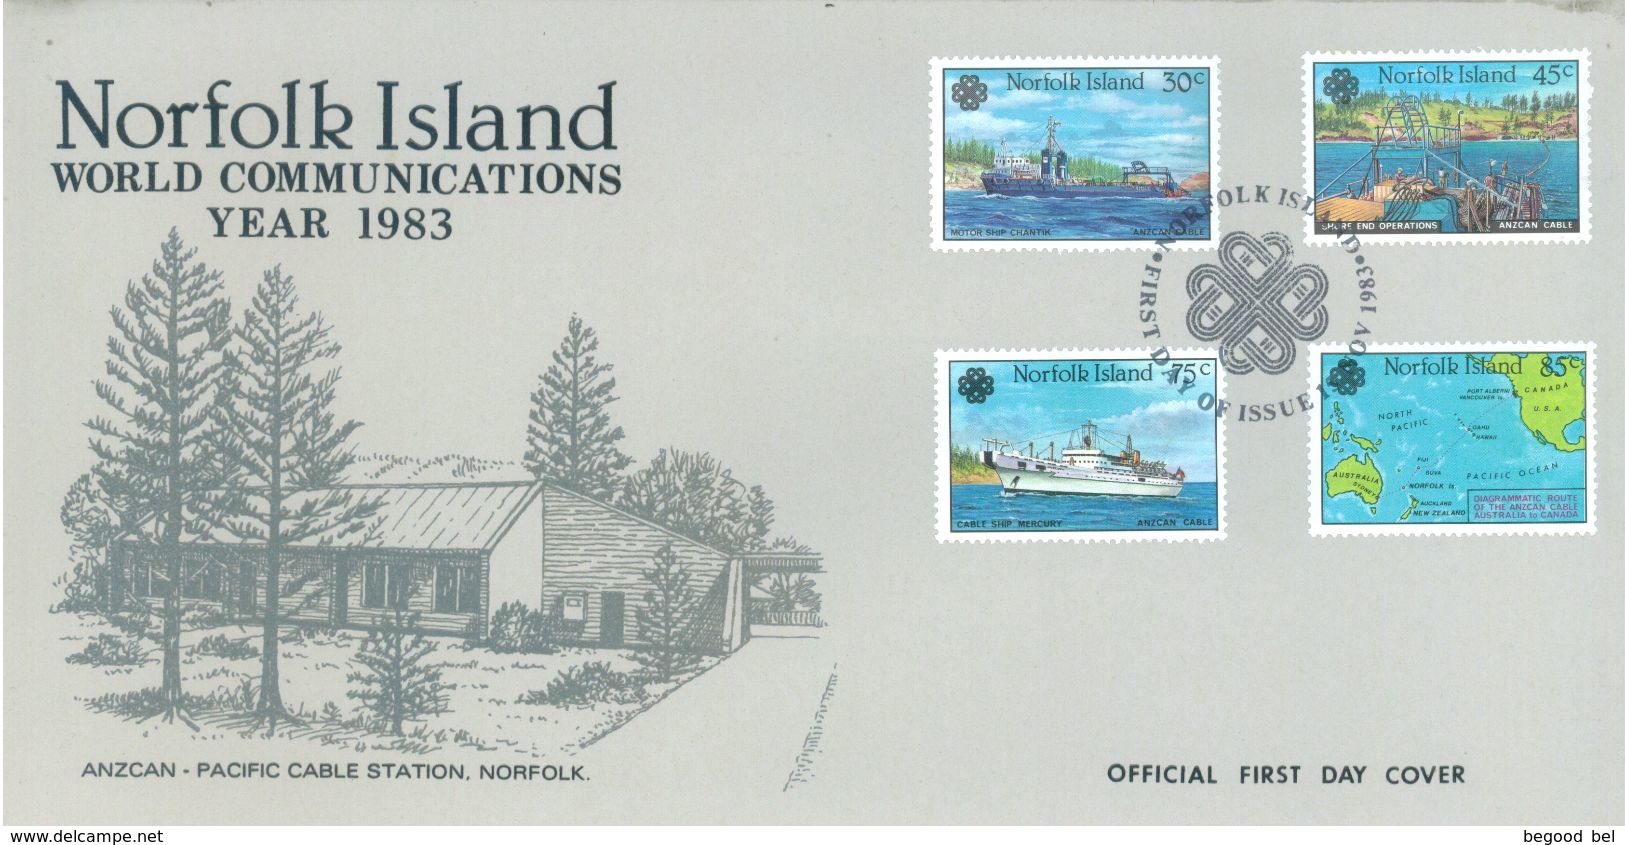 NORFOLK ISLAND - FDC - 15.11.1983 - WORLD COMMUNICATIONS ANZCAN - Yv 311-314 ASC 312-314 - Lot 17503 - Norfolk Island